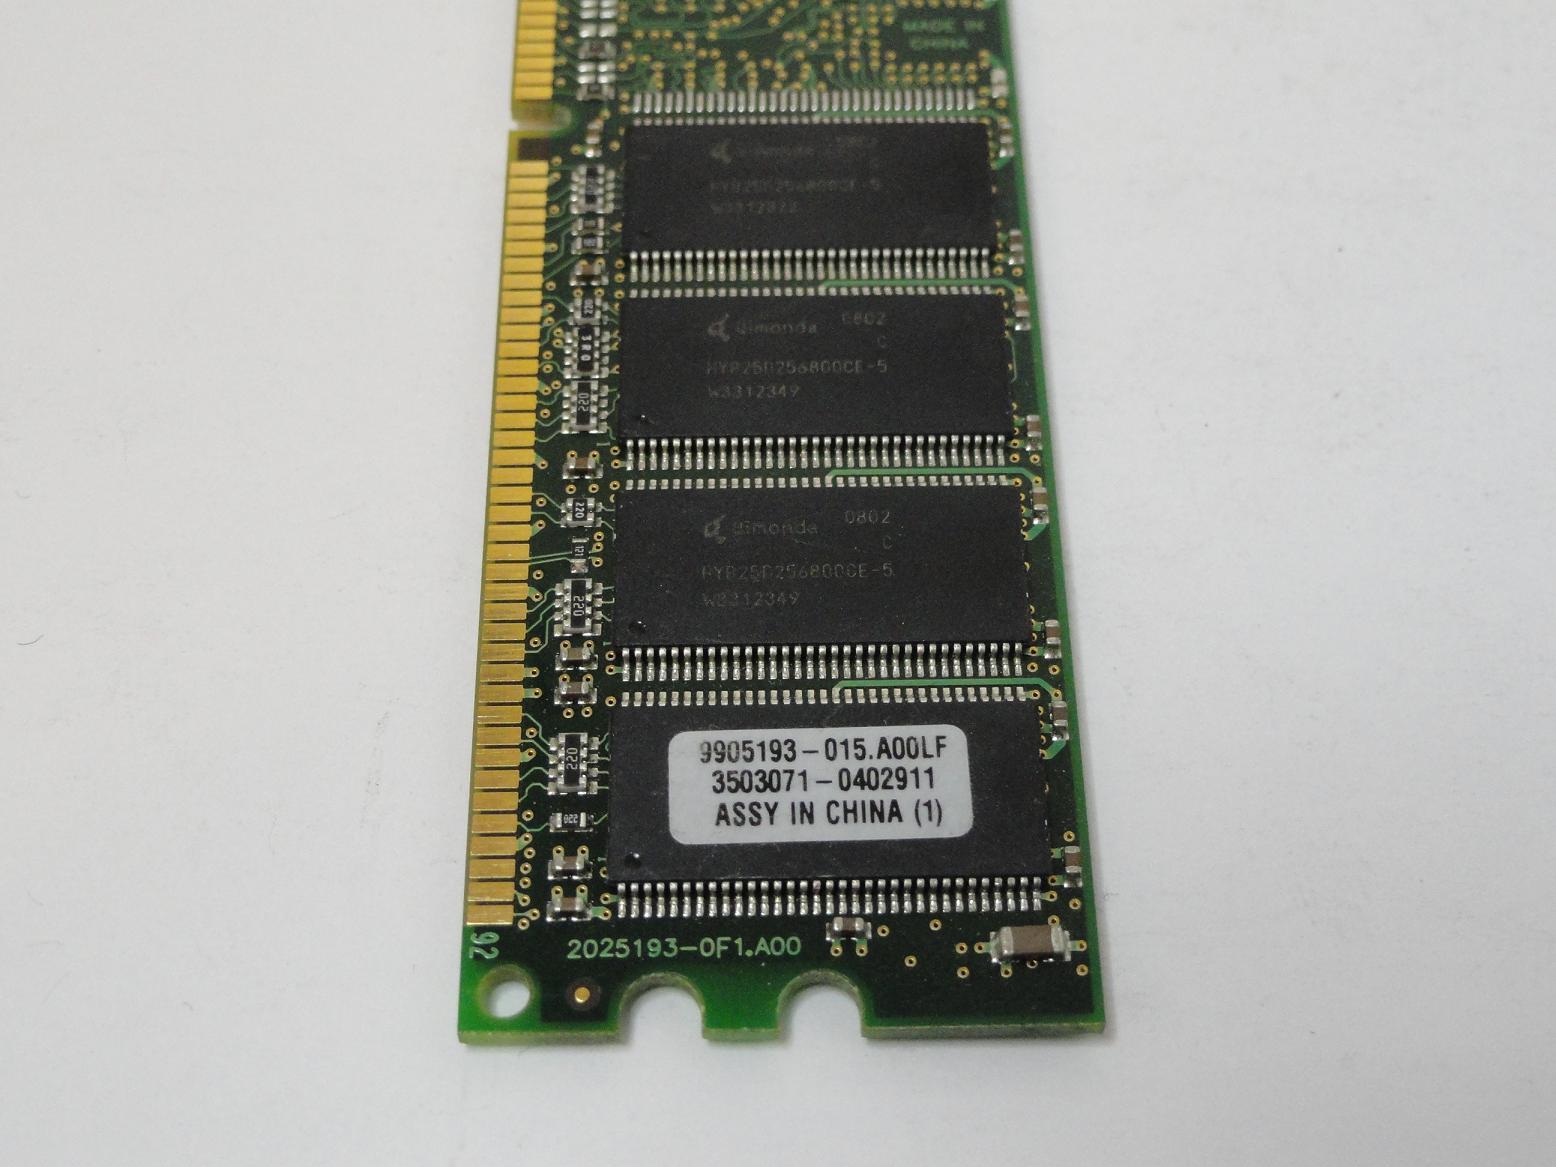 PR25365_9905193-015.A00LF_Kingston 512MB PC3200 DDR-400MHz DIMM RAM - Image4